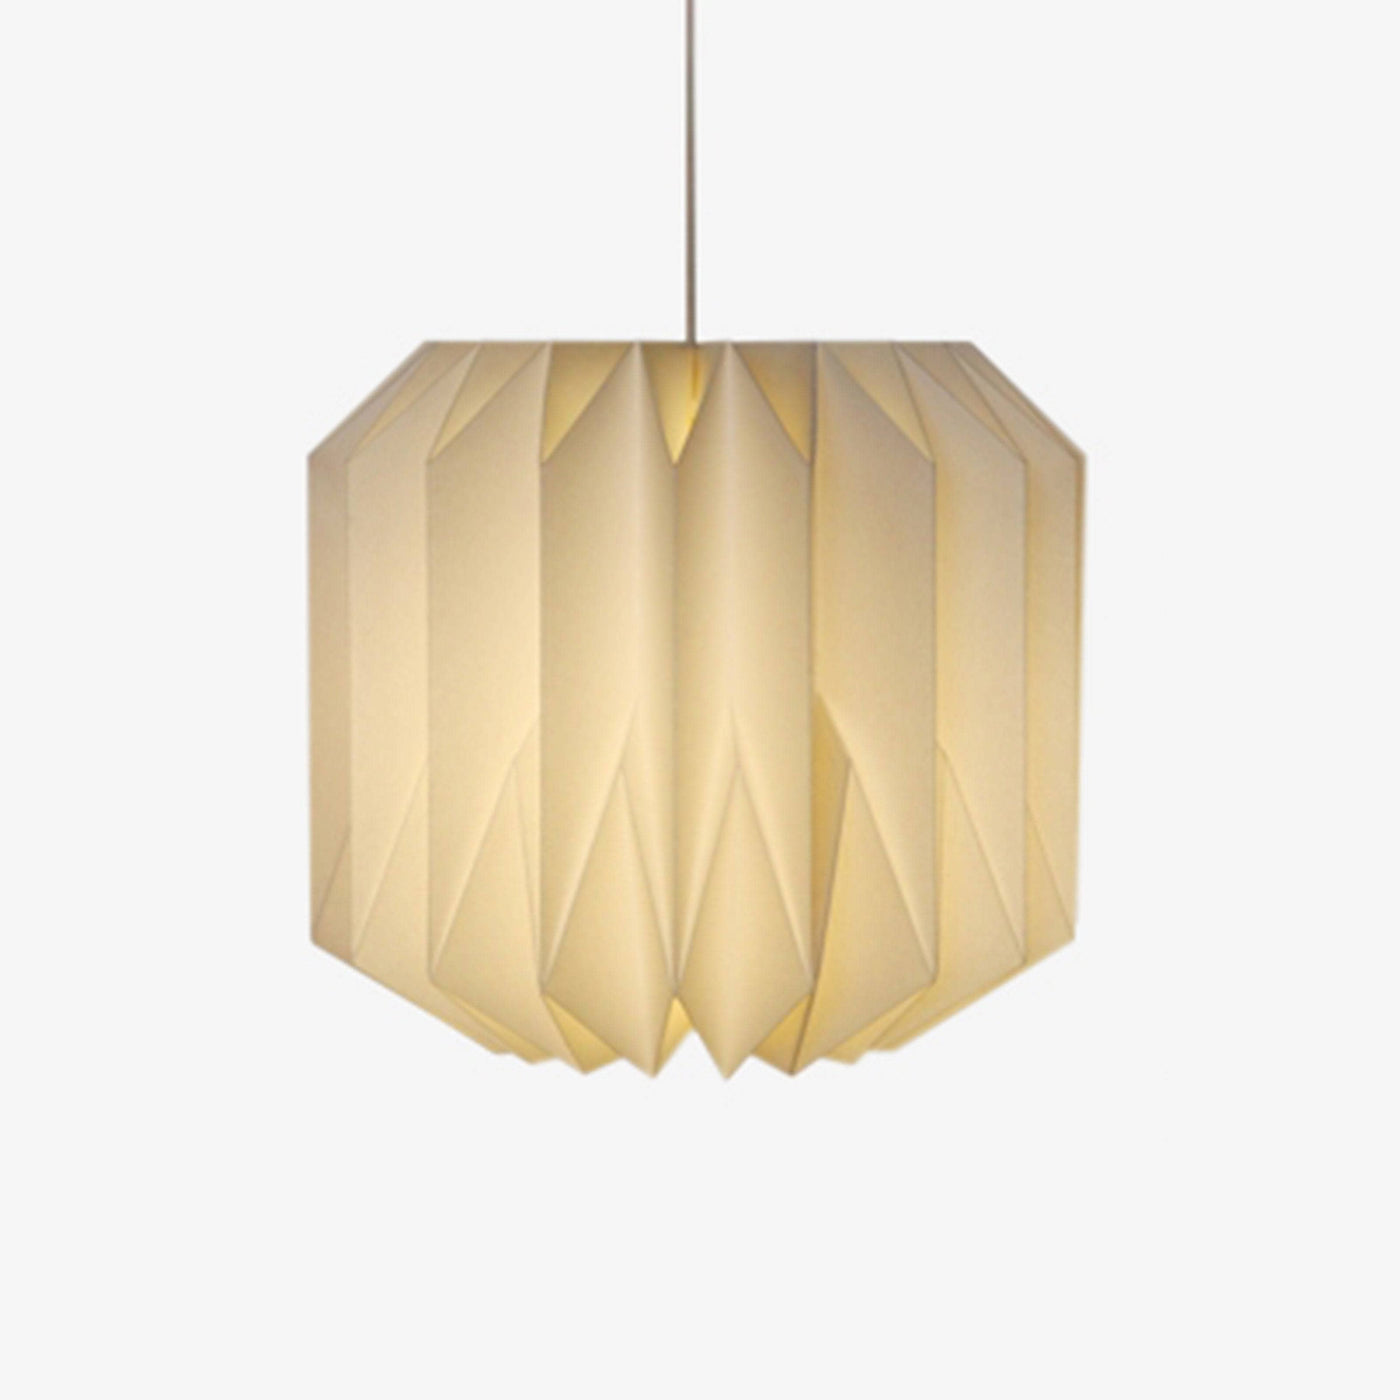 Ikun Paper Ceiling Lamp, Off-White Ceiling Lighting sazy.com